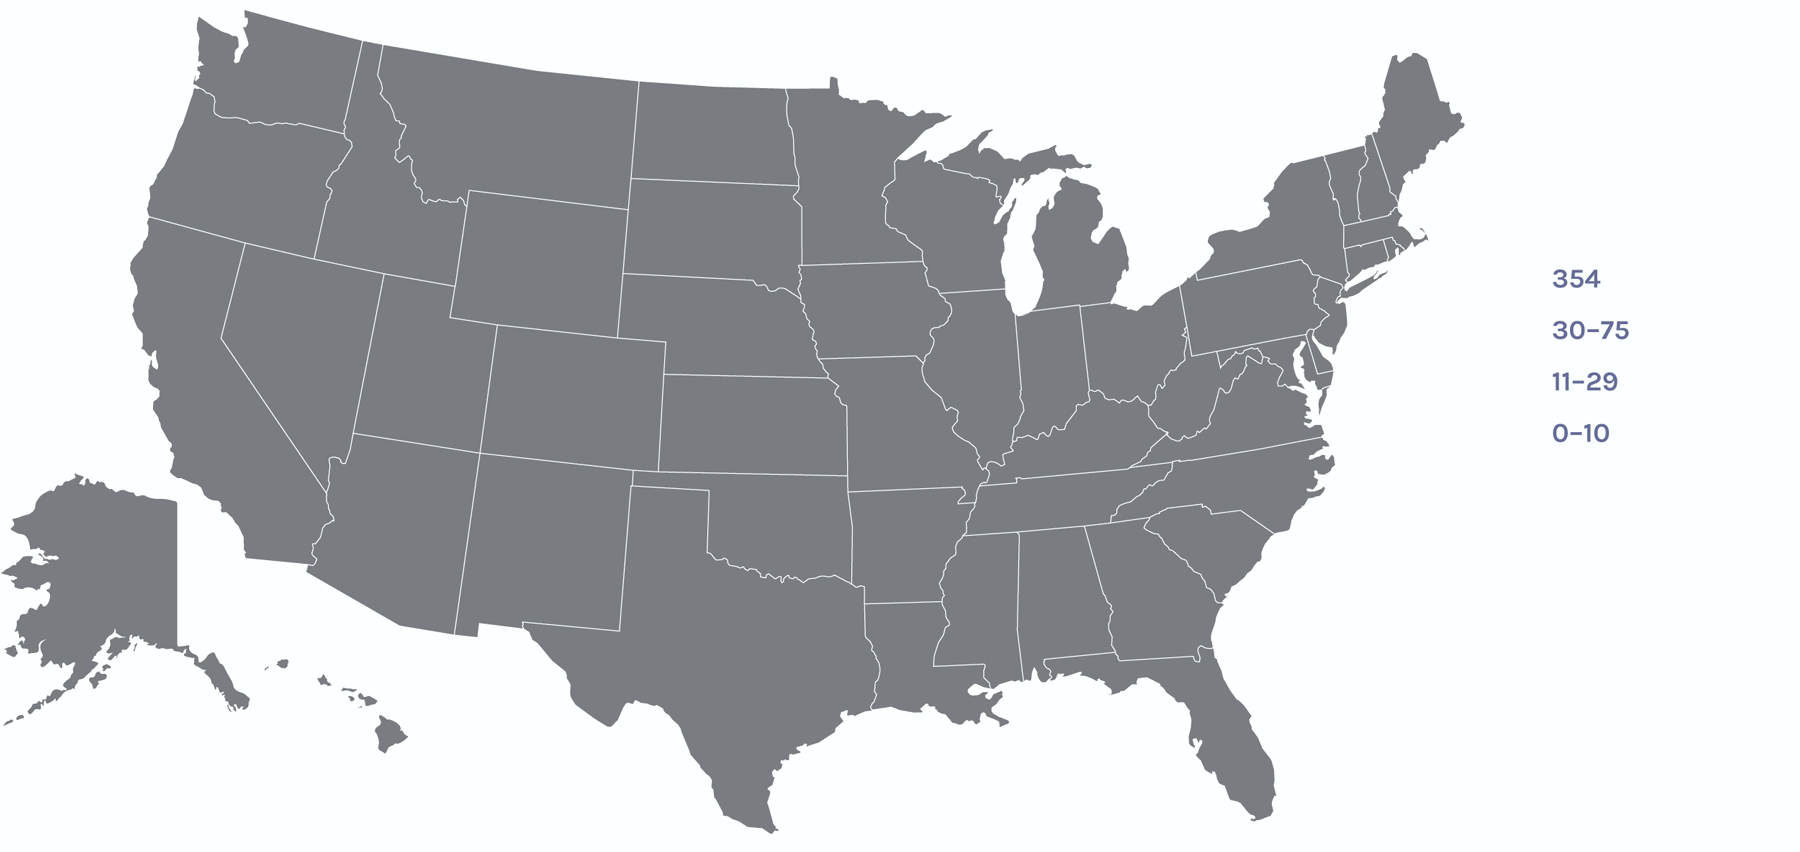 A map of the U.S. shows a breakdown of users in the country: (354) California; (30–74) Wisconsin, Michigan, Washington, Colorado, New York, Georgia, Illinois, Massachusetts, Tennessee, Ohio, Arizona, Missouri, North Carolina, Florida, Minnesota, Montana, Texas; (11–29) Oregon, New Mexico, Conneticut, Alabama, Indiana, Maryland, Nebraska, New Jersey, Delaware, New Hamphsire, Pennsylvania, Utah, Hawaii, Iowa, Virginia ; (0–10) Kansas, Oklahoma, South Carolina, Lousiana, West Virginia, Maine, Nevada, Rhode Island, Arkansas, Idaho, Missouri, North Dakota, Washinton, D.C., Puerto Rico, Vermont, Kentucky, Whyoming, Alaska, South Dakota.. A box in the corner shows a breakdown by industry: Academic—1,190; Industry—28; DOE nat'l labs—208; Government—76; Other—90; Total Users—1,592